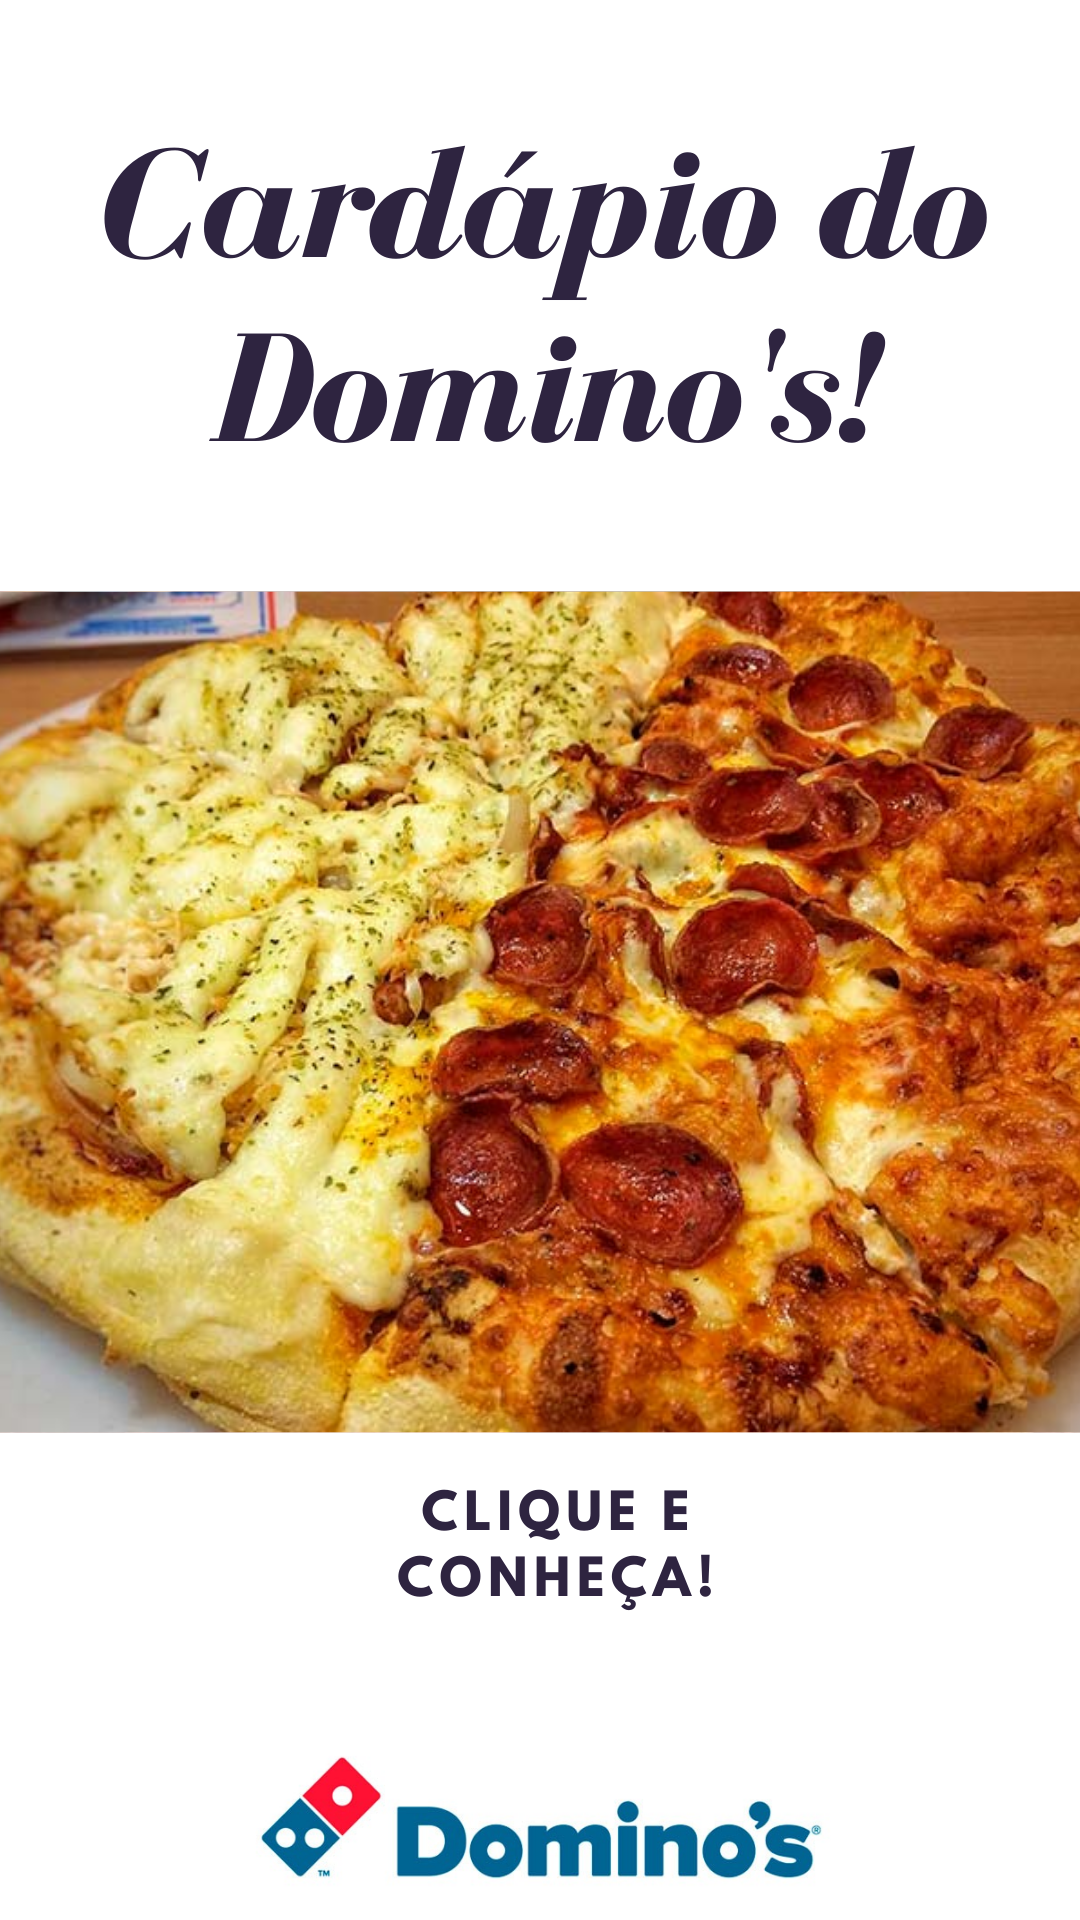 Cardápio Domino's completo com preços - Testa pra Mim | Cardapio de pizza,  Sabores de pizza, Cardapio - dominos cardapio